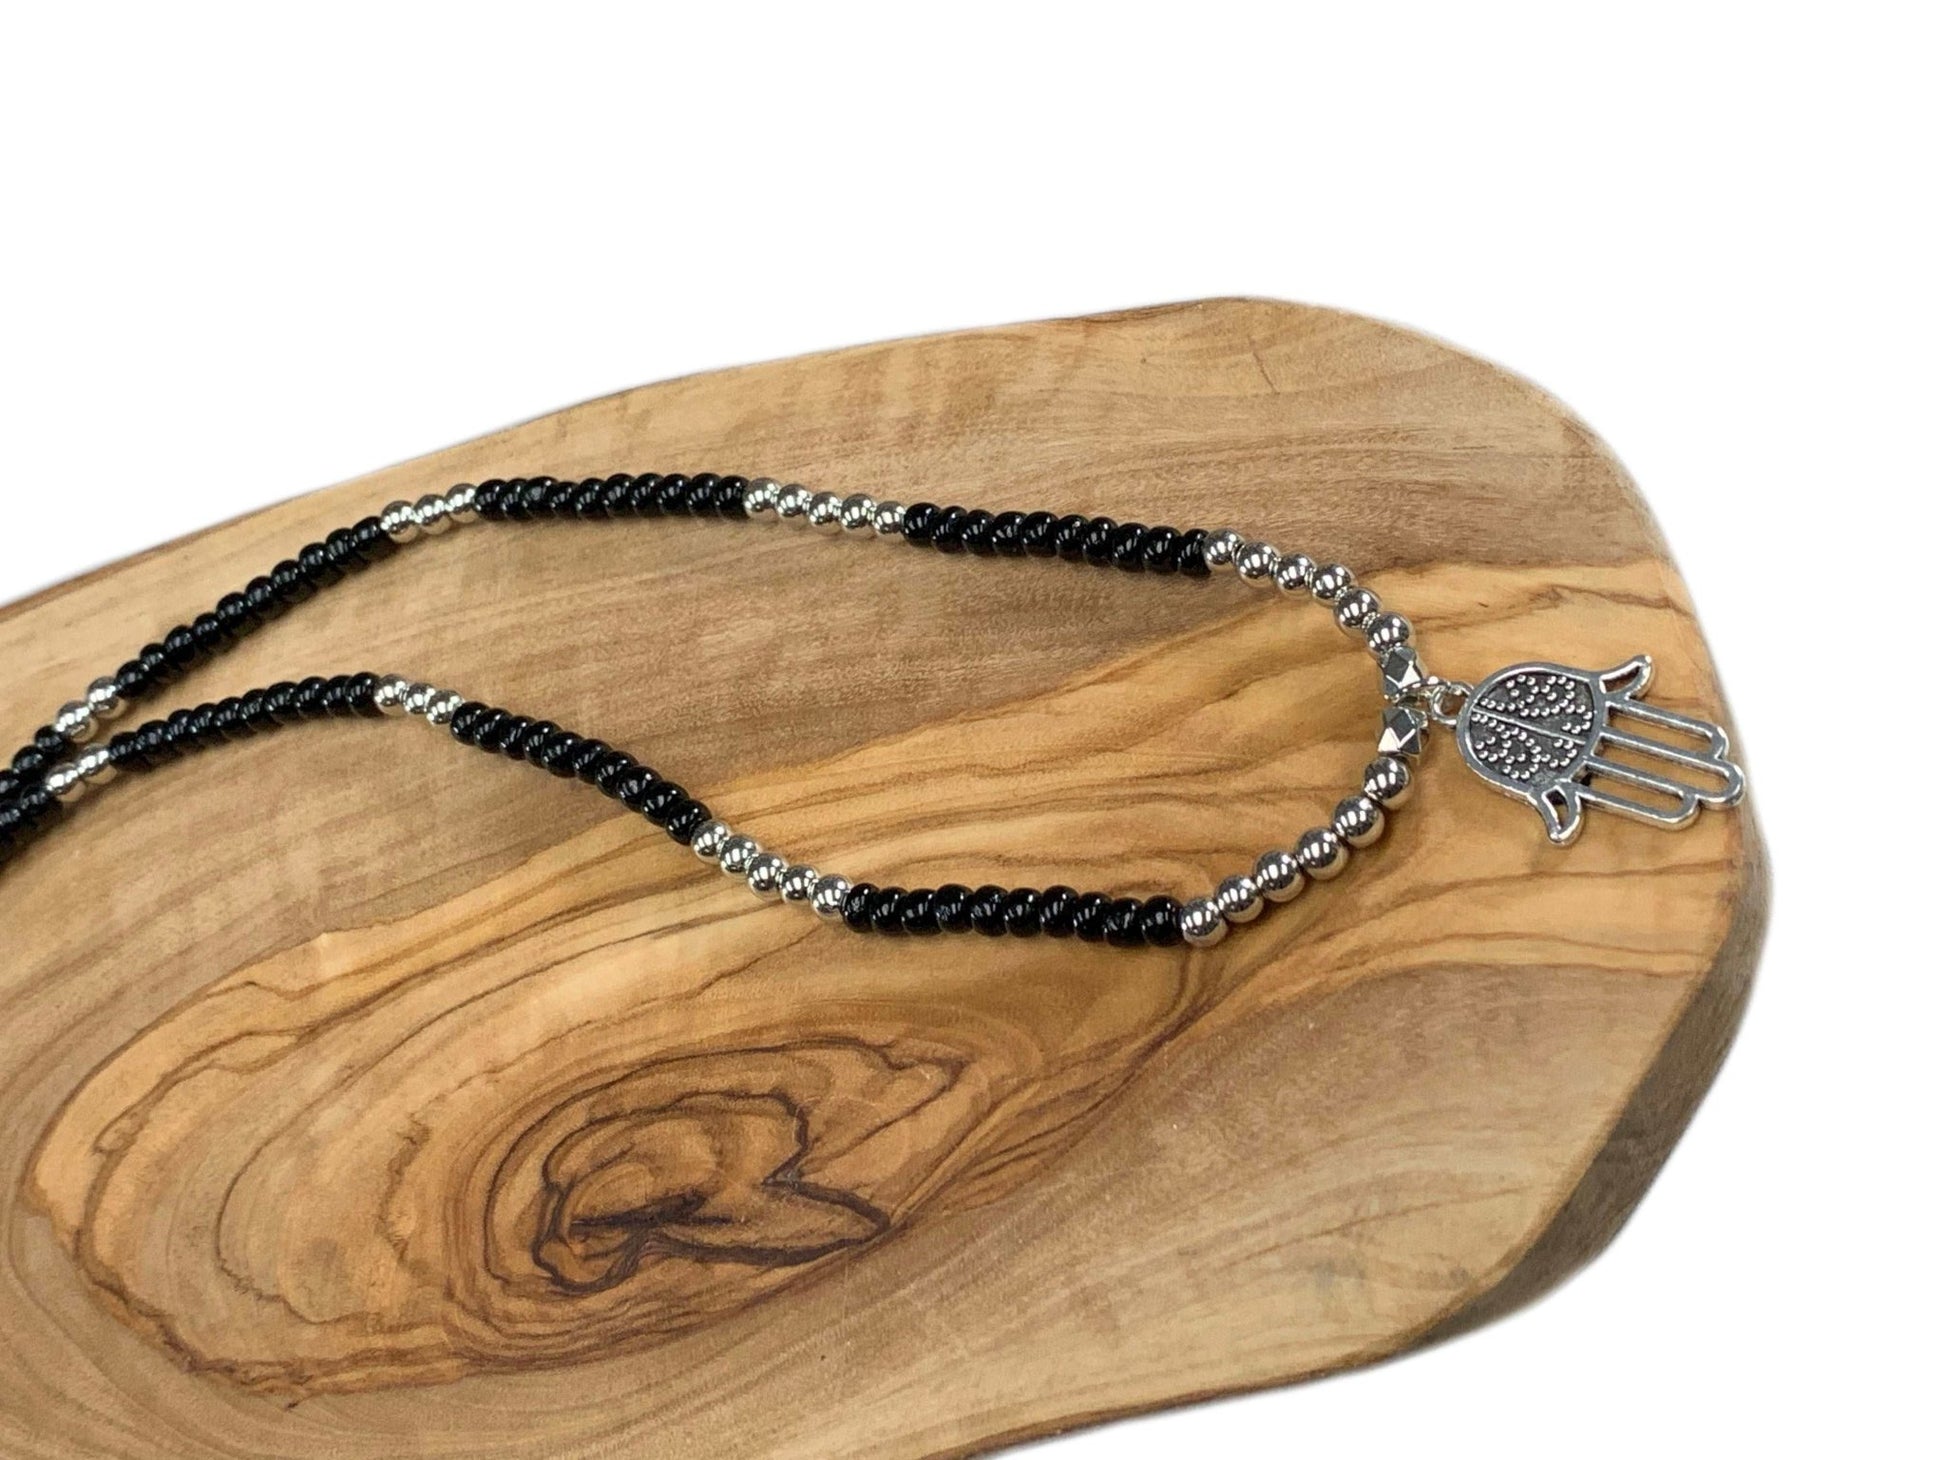 Alexa Handmade Beaded Necklace with Silver Hamsa Pendant - Born Mystics